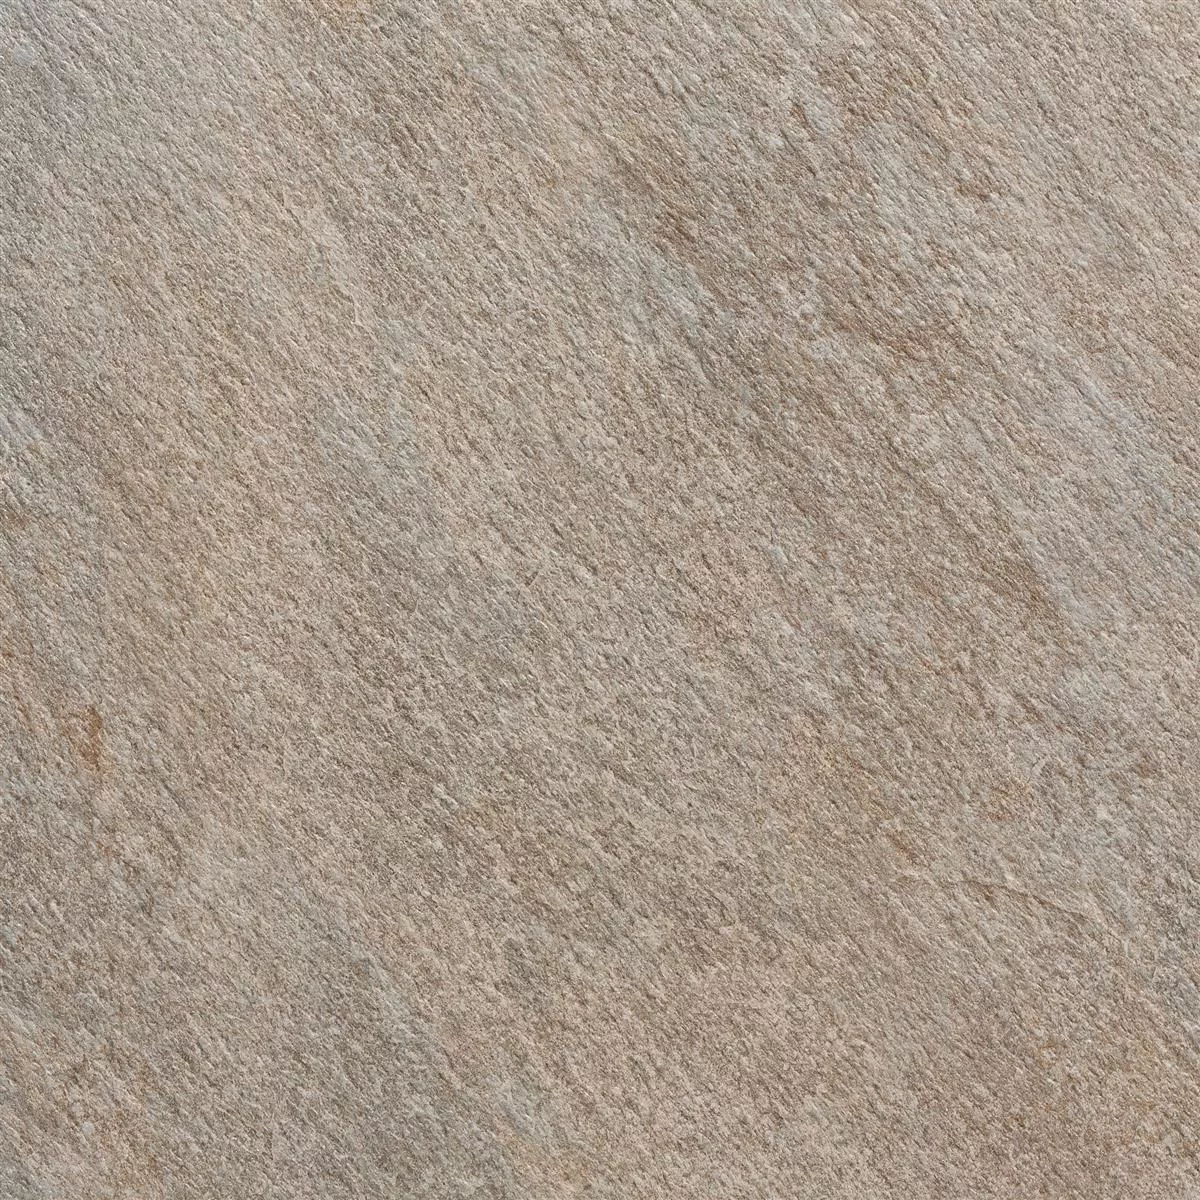 Próbka Taras Płyta Stoneway Kamień Naturalny Optyka Szary 60x60cm